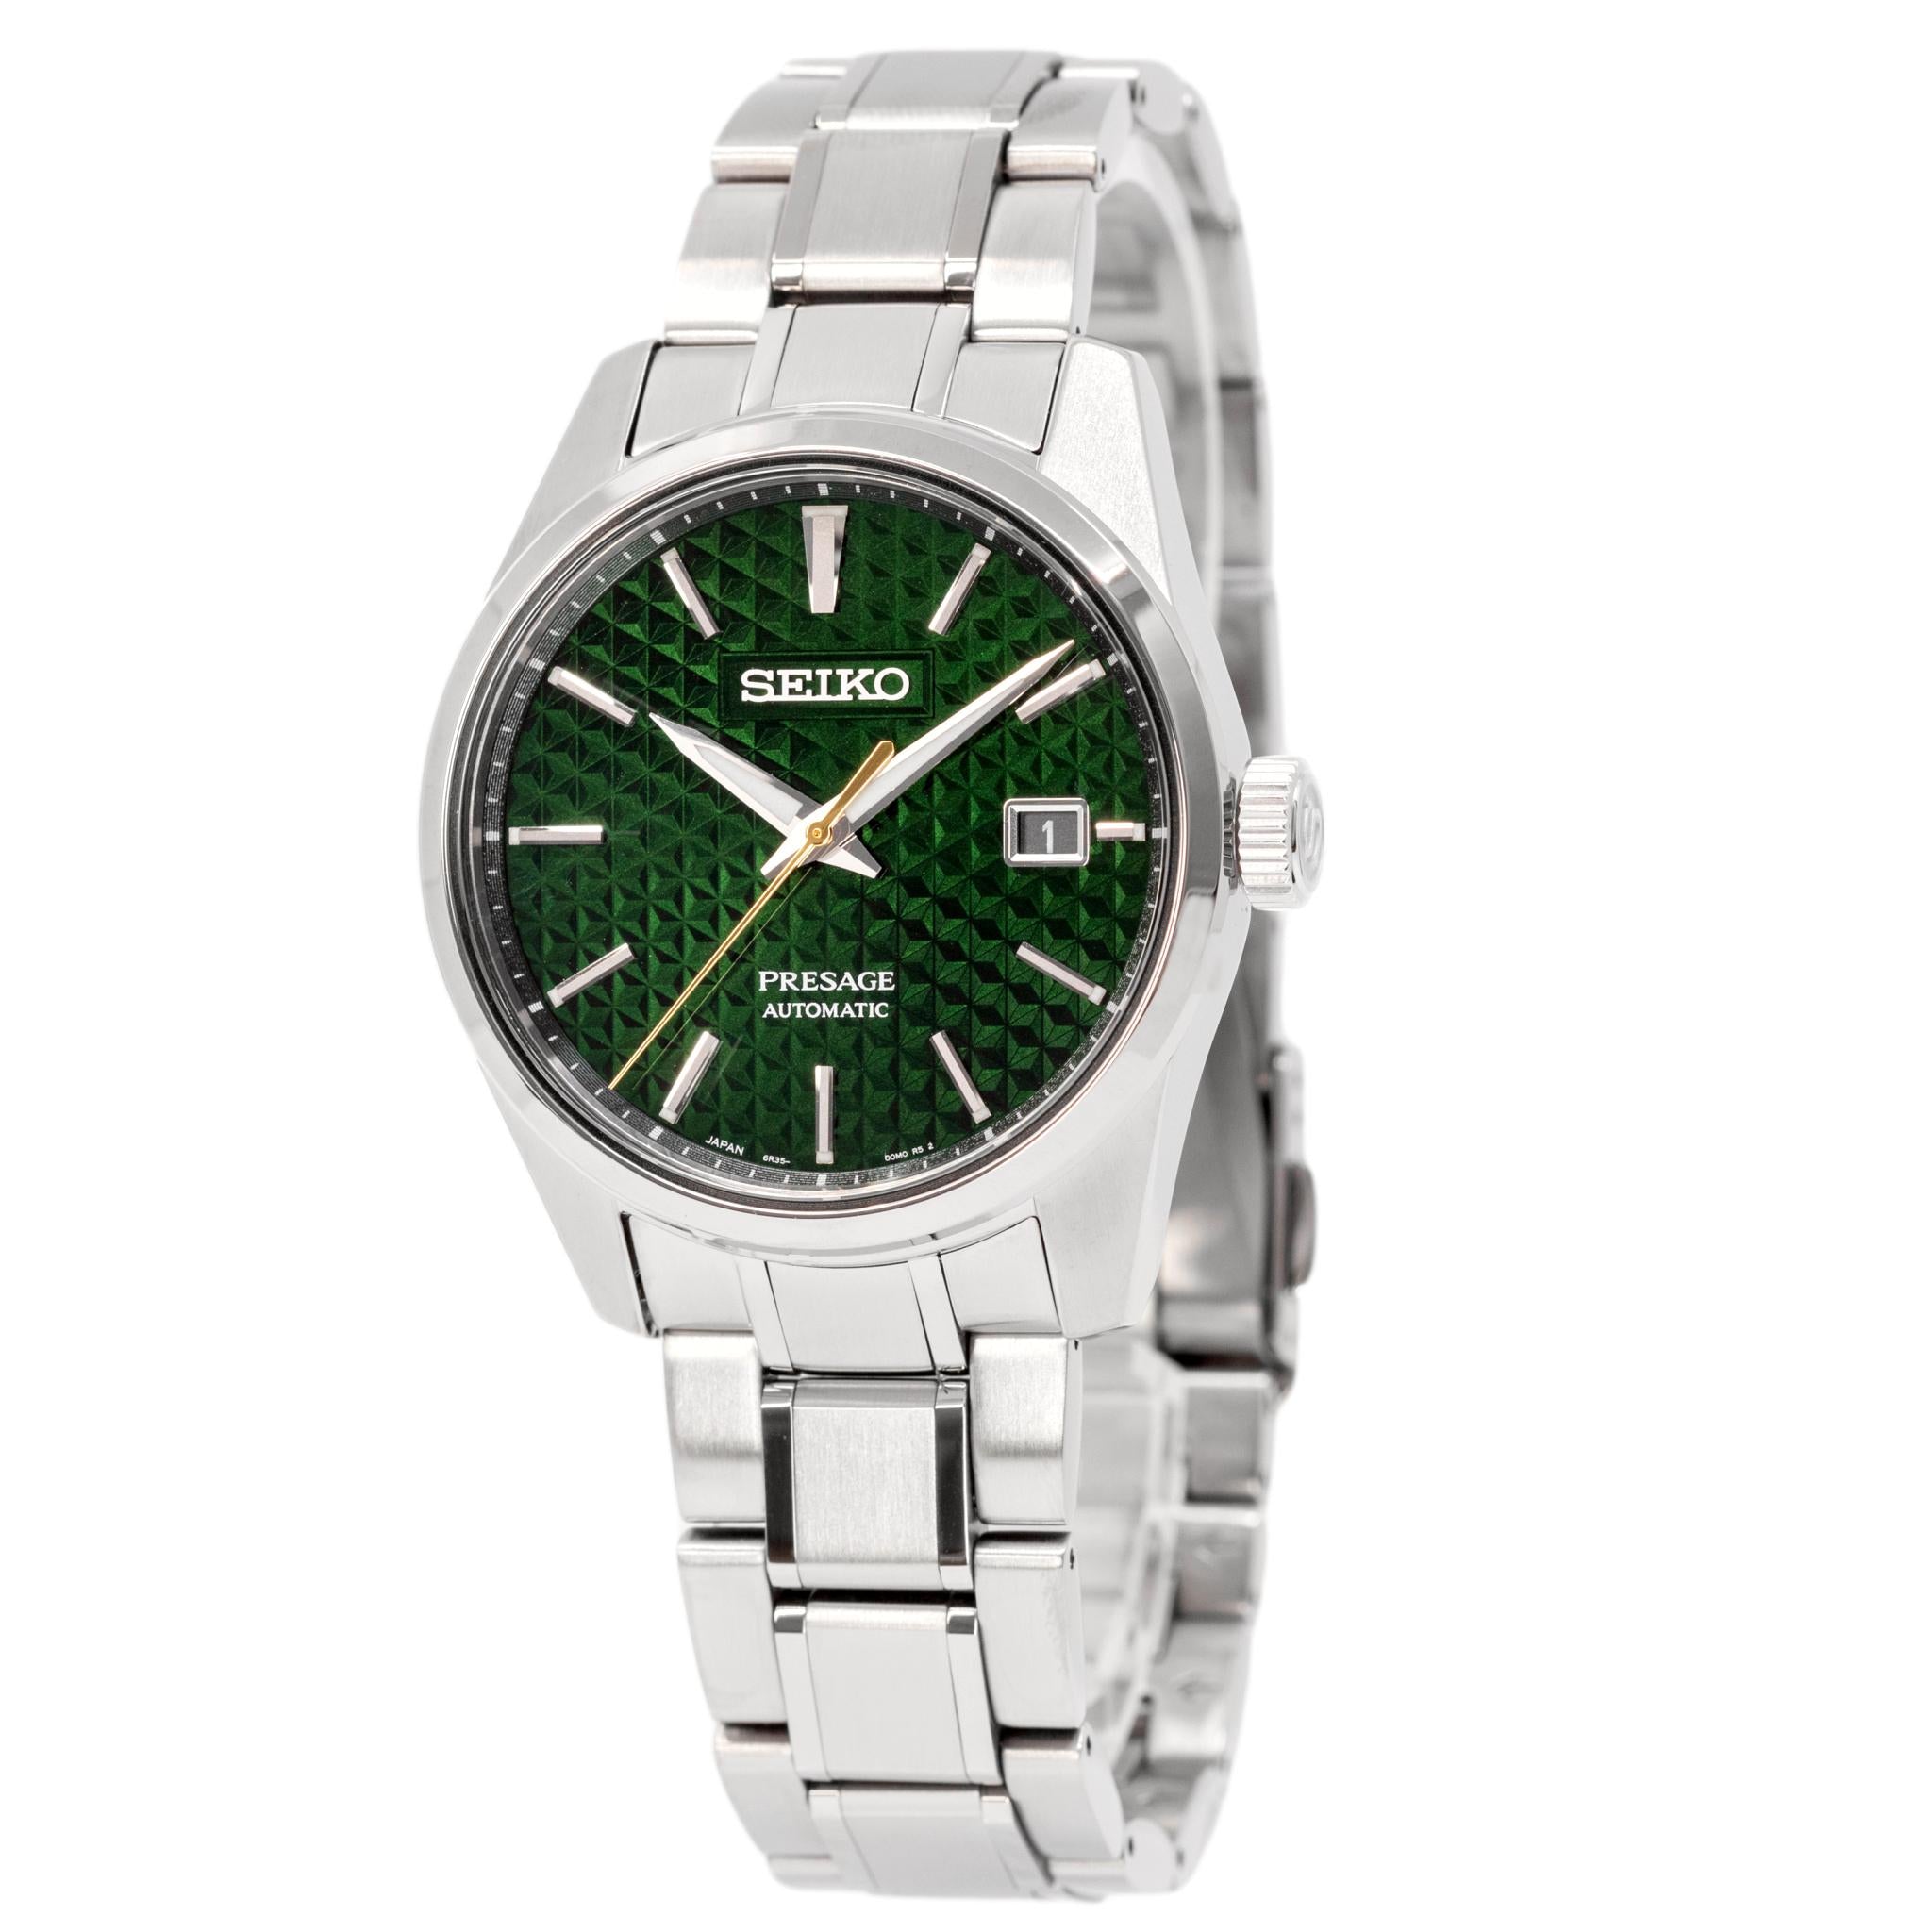 SPB169J1 -Seiko Men's SPB169J1 Presage Hemp Leaf Green Dial Watch 